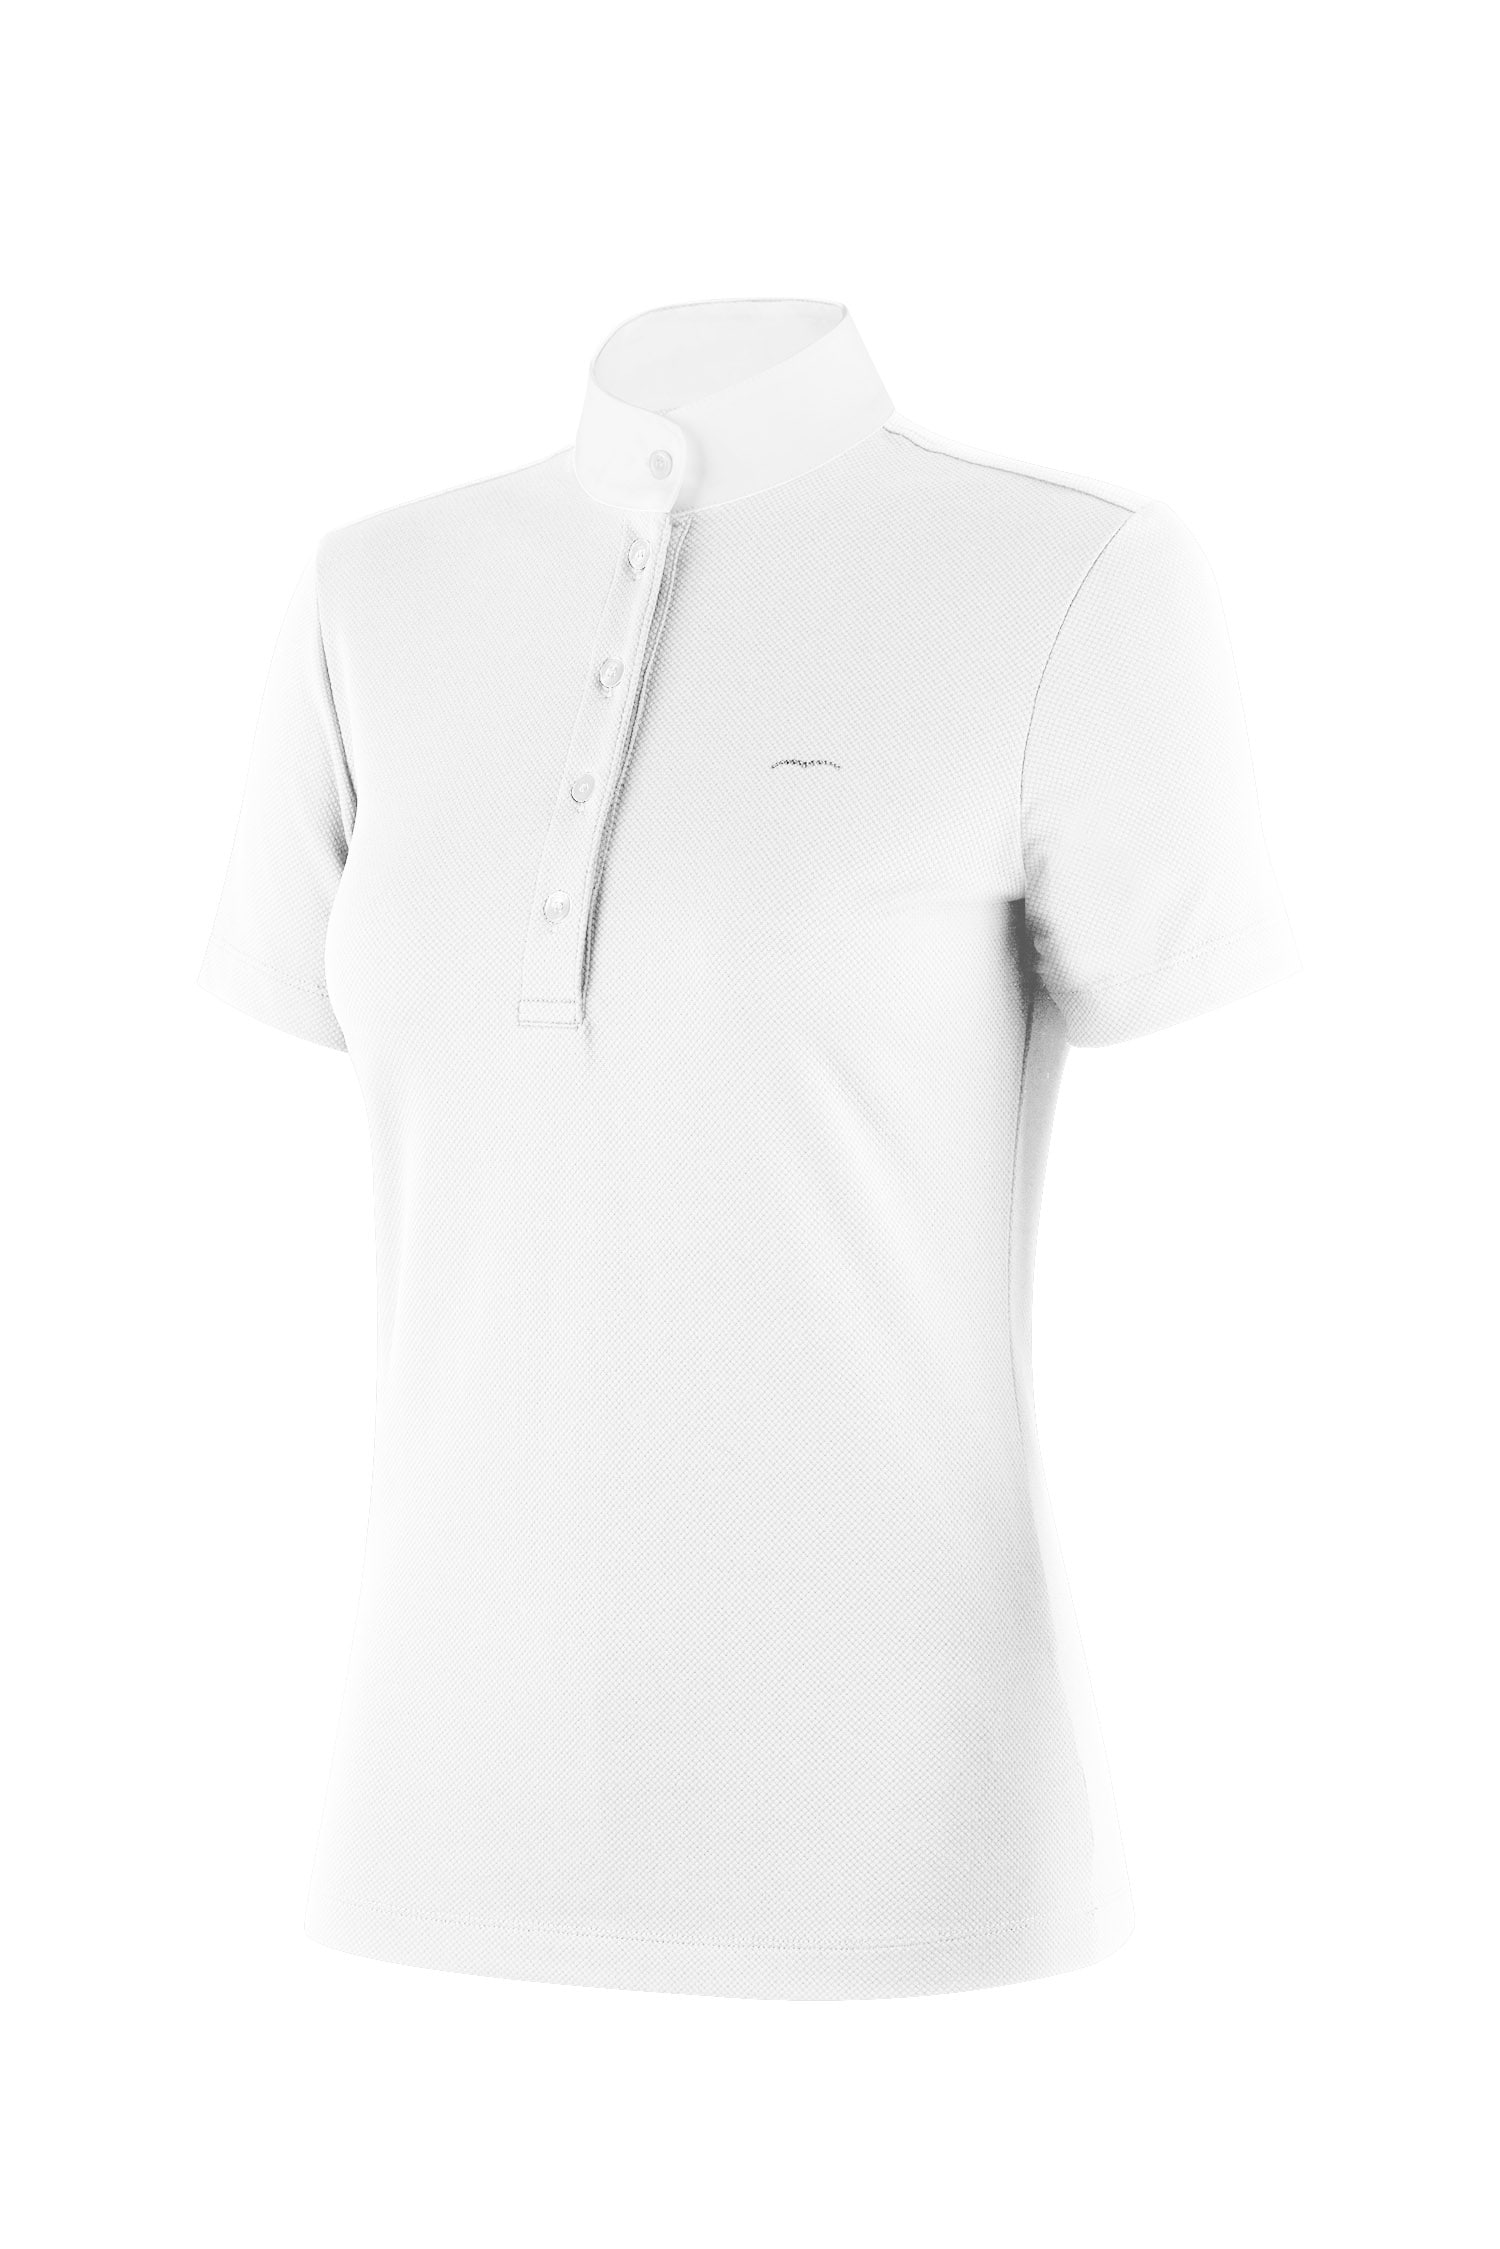 Basilea competition shirt - White